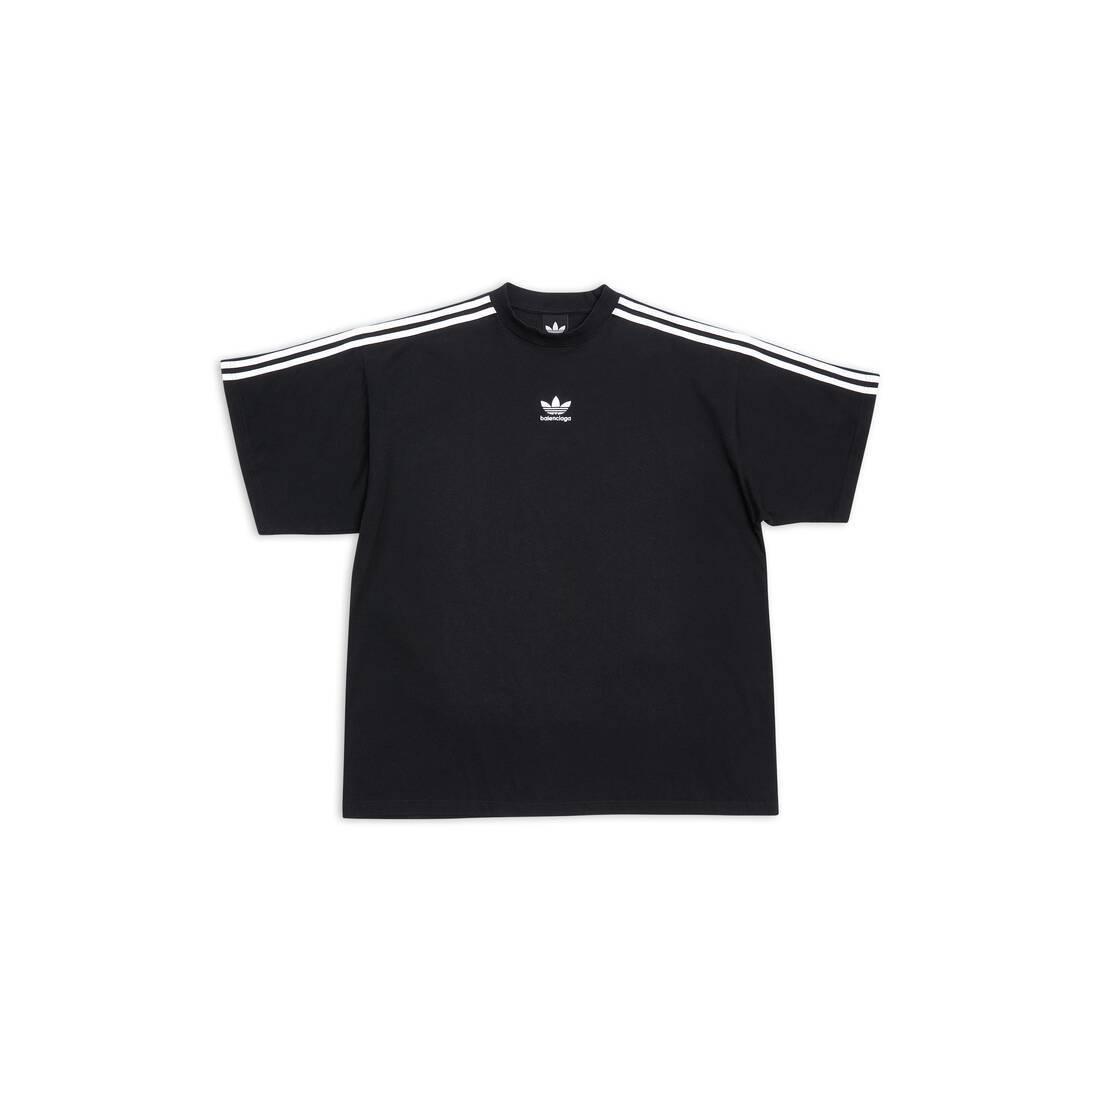 Balenciaga / Adidas T-shirt Oversized in Black | Lyst